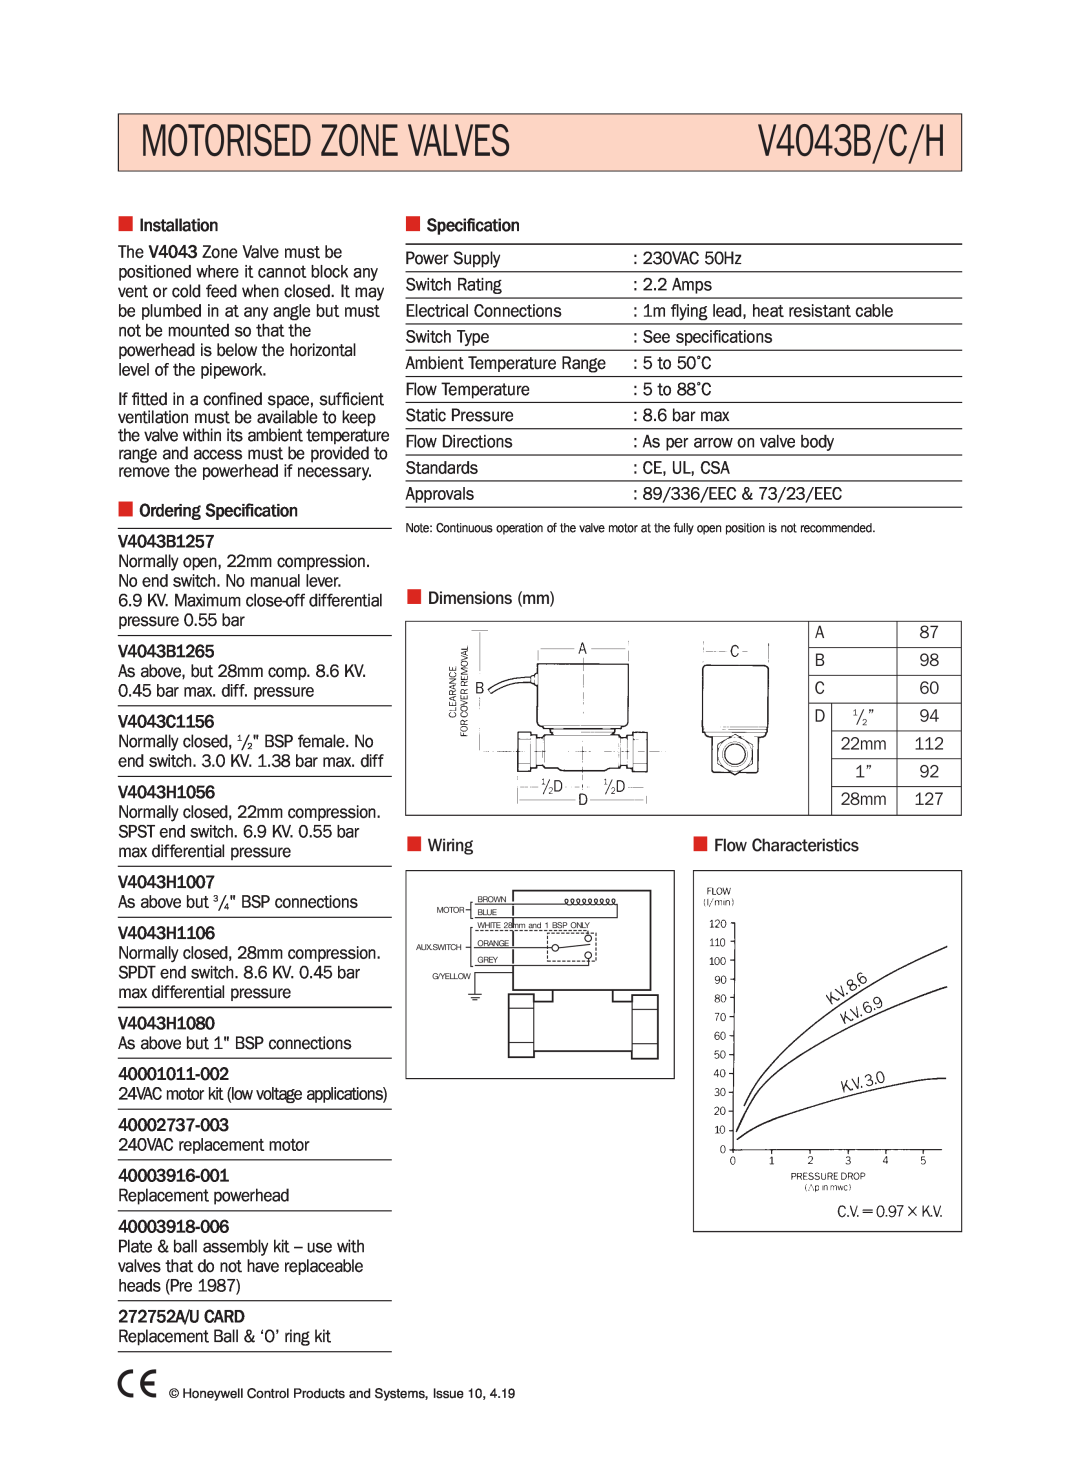 Honeywell manual Motorised Zone Valves, V4043B/C/H 